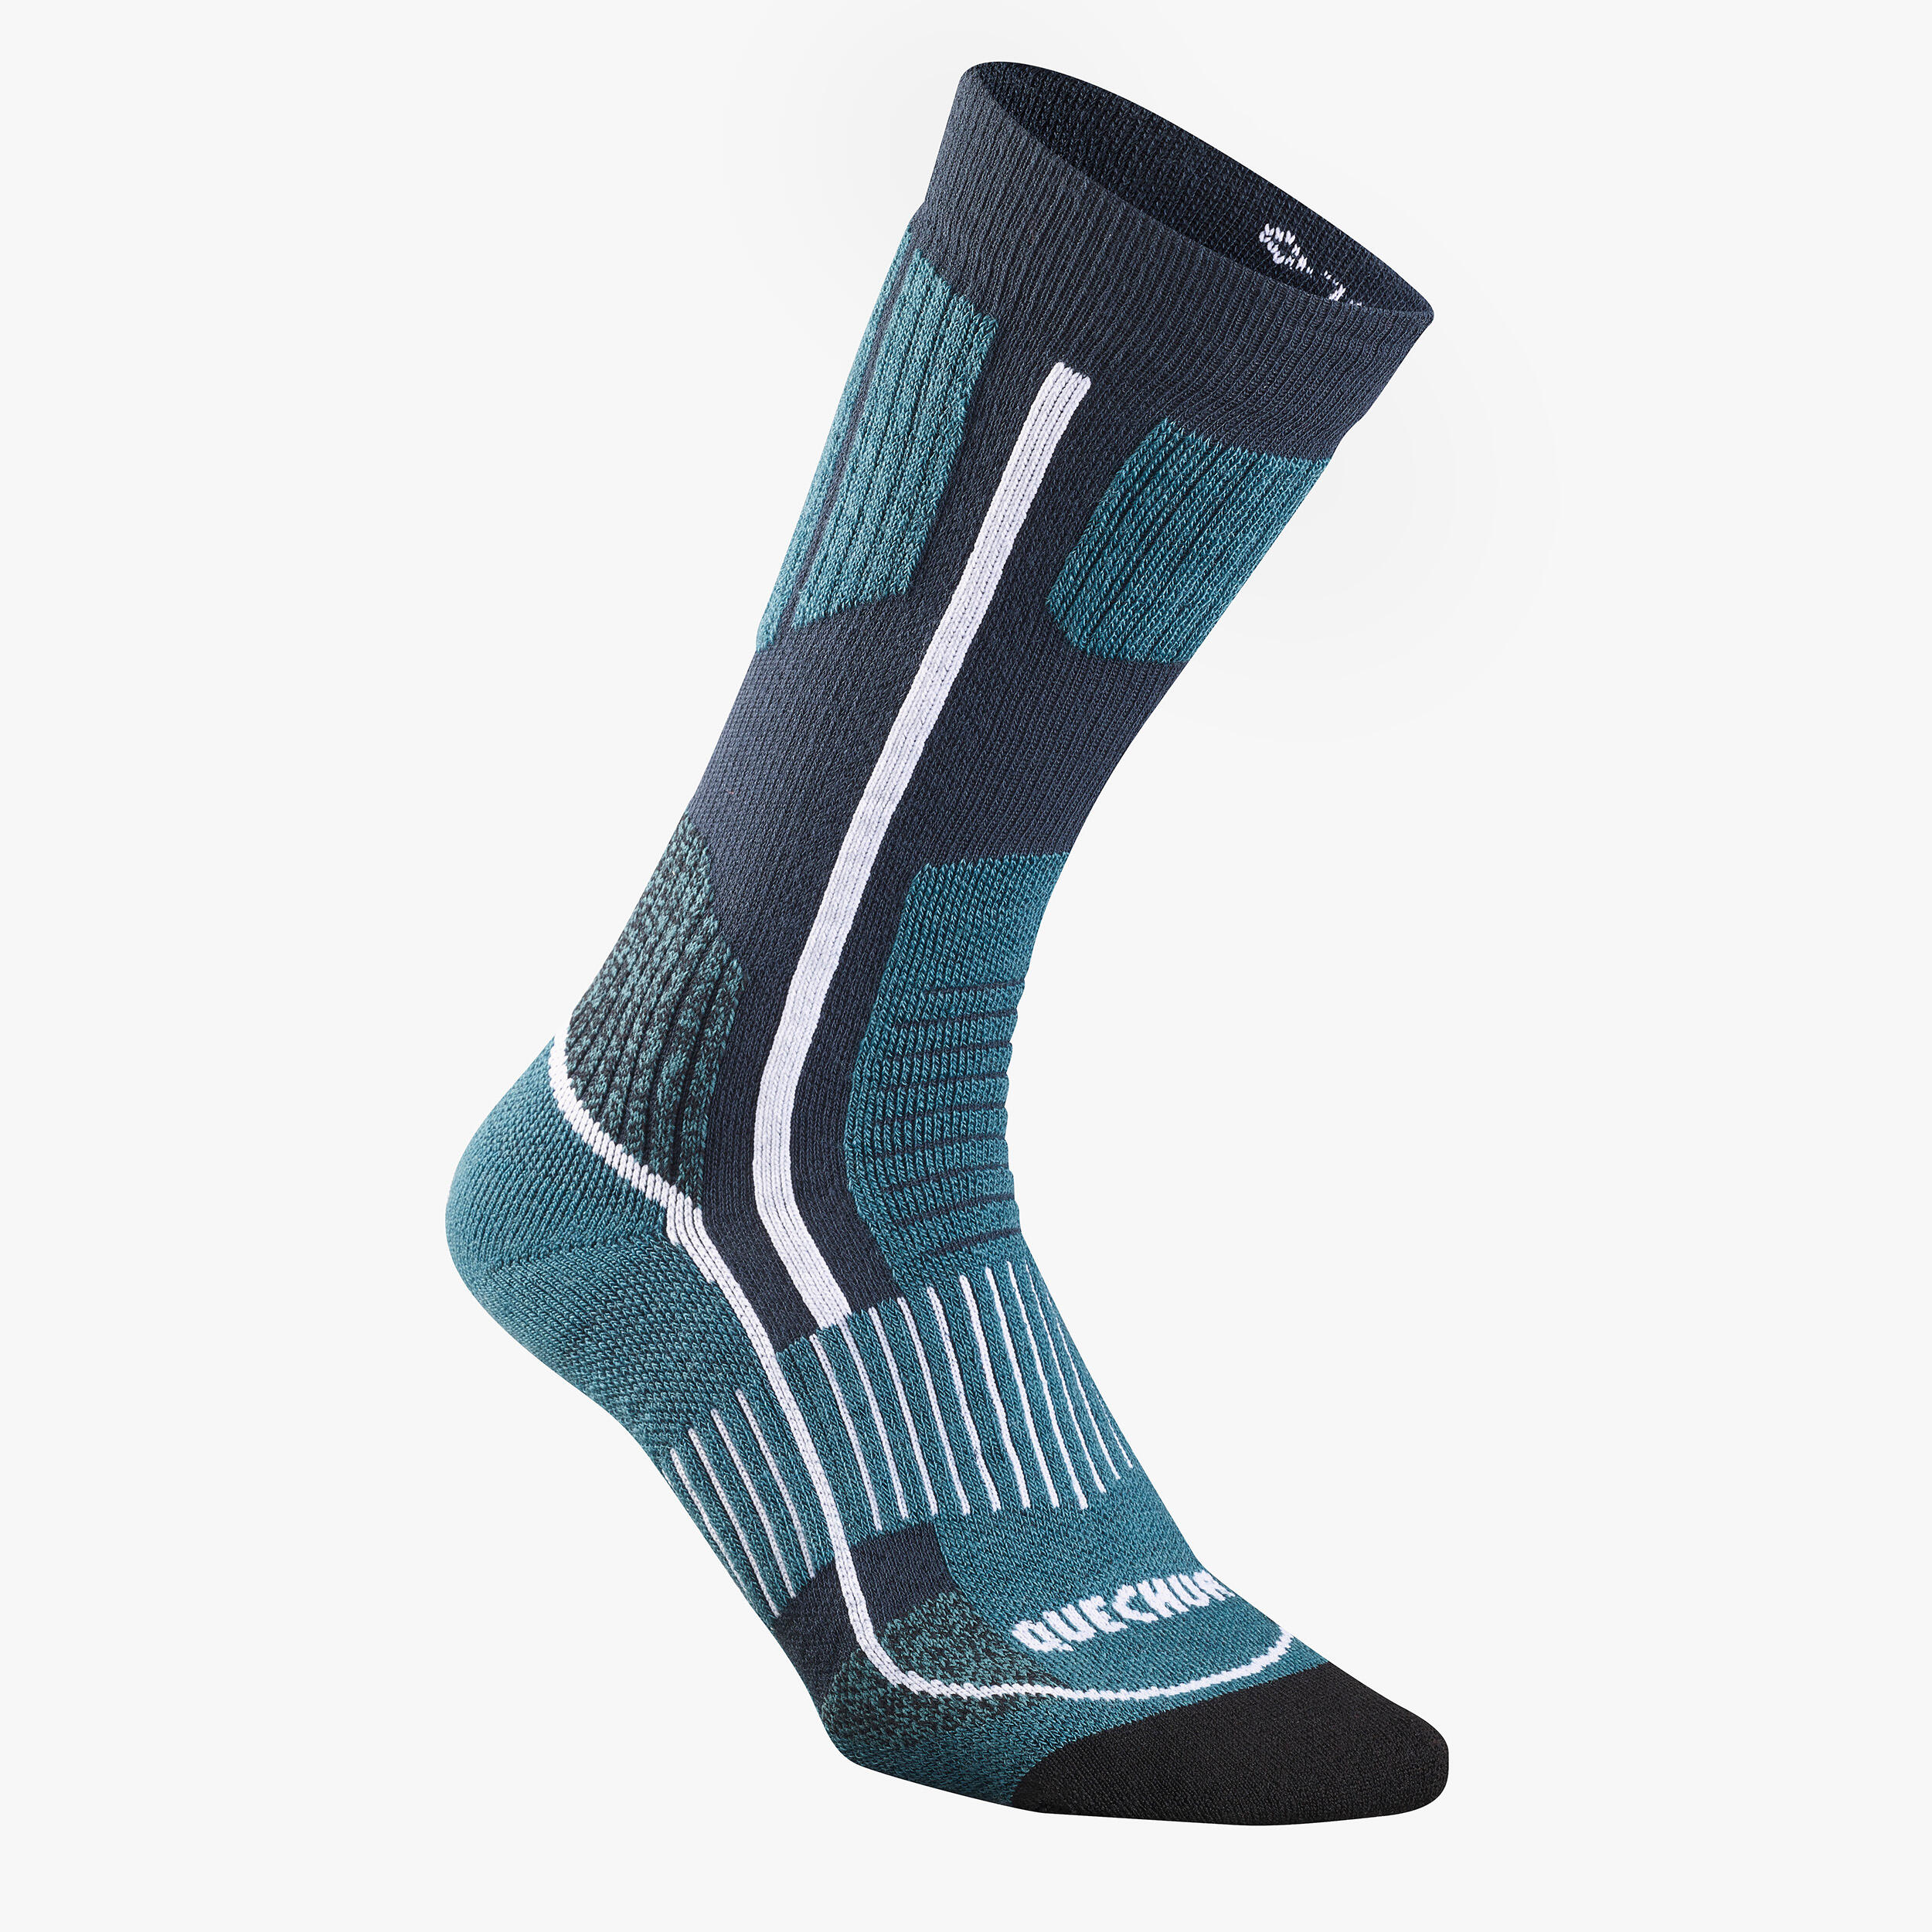 Mid-Height Hiking Socks - SH 500 Blue - Dark blue, Deep teal - Quechua ...